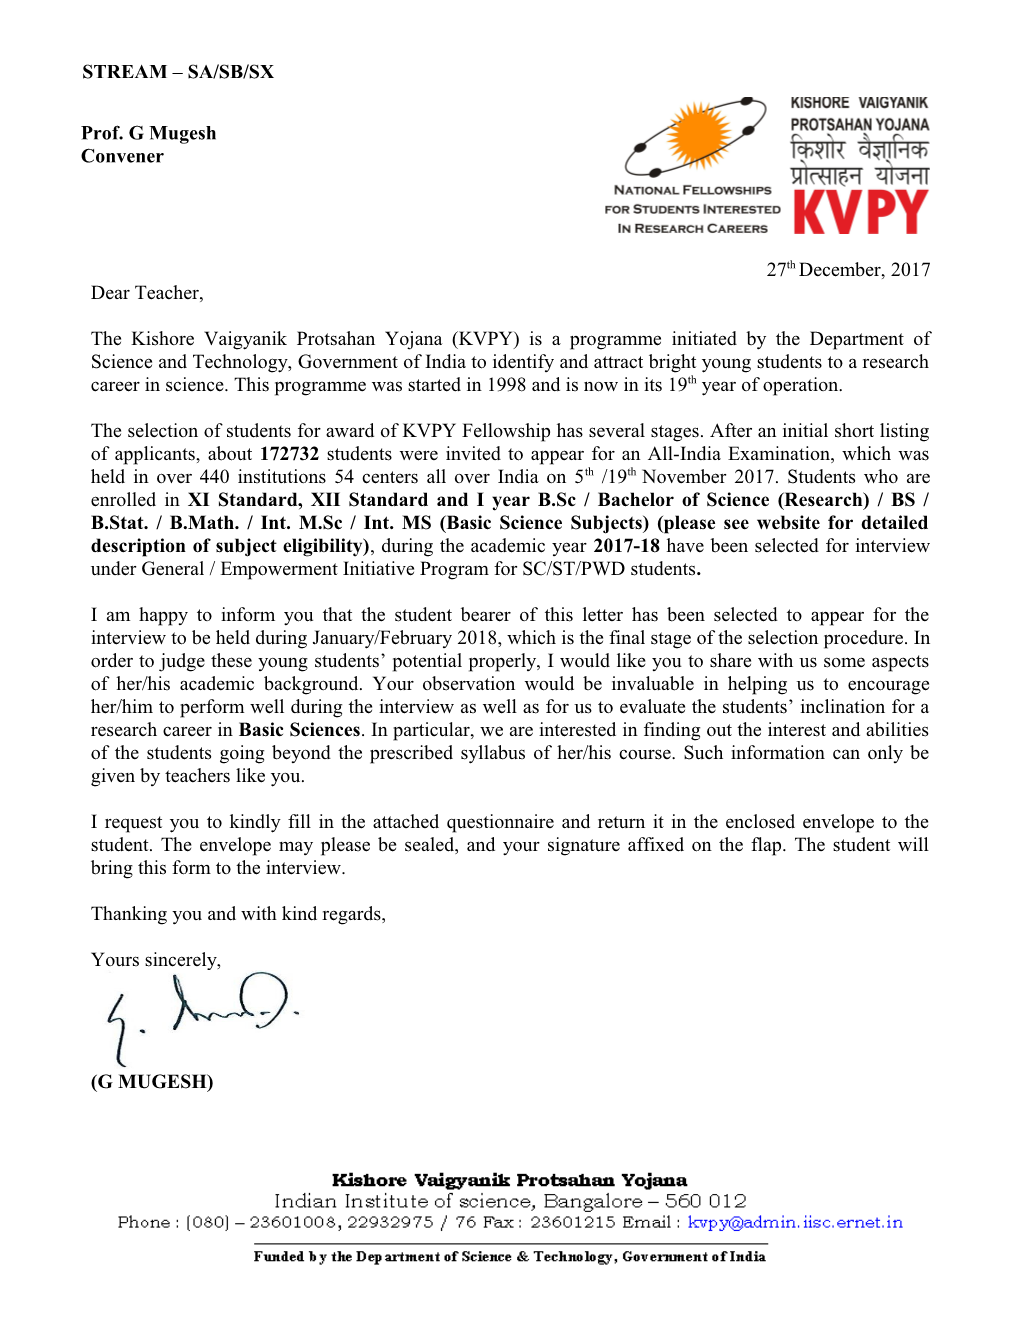 The Kishore Vaigyanik Protsahan Yojana (KVPY) Is a Programme Initiated by the Department